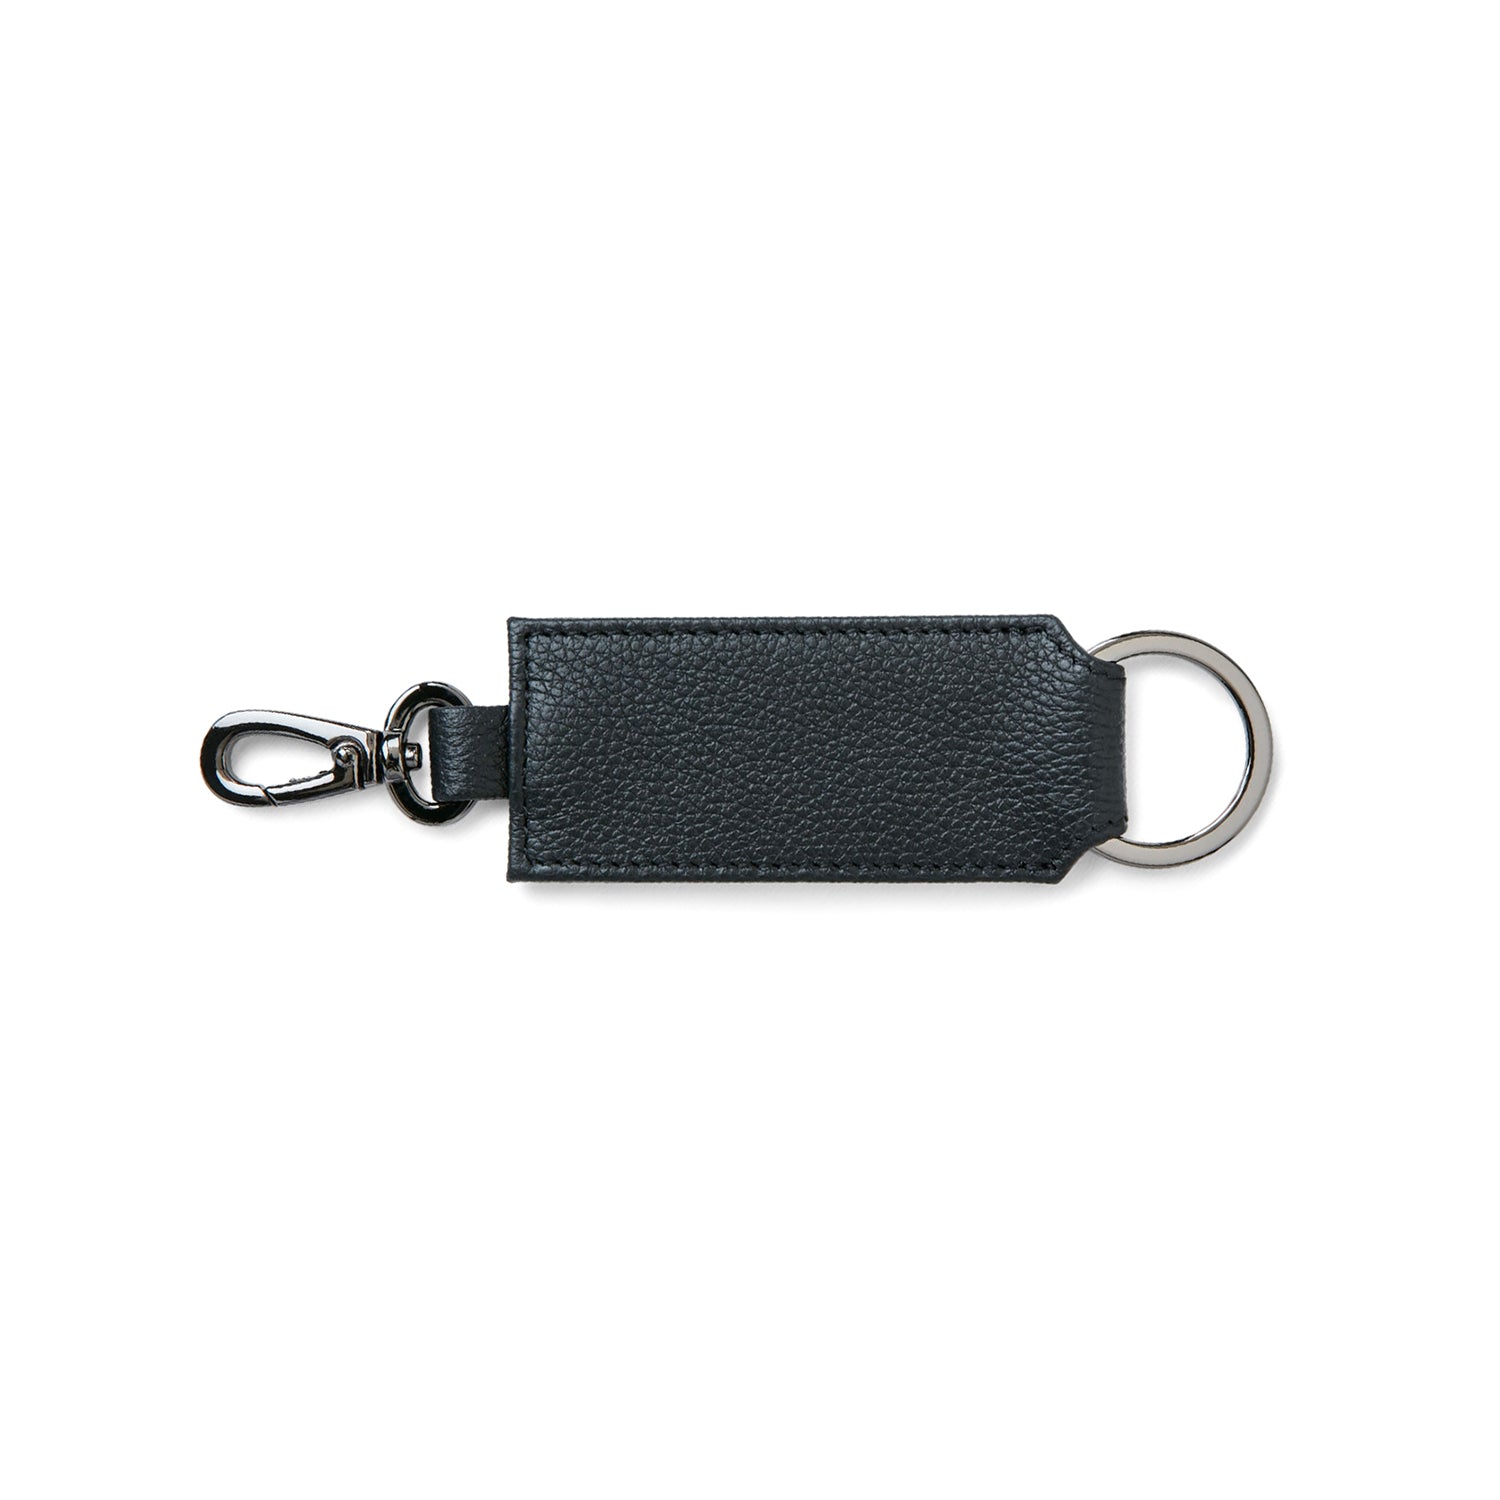 Odin Leather Goods Bleed Knot Keychain + Hook Black / Black